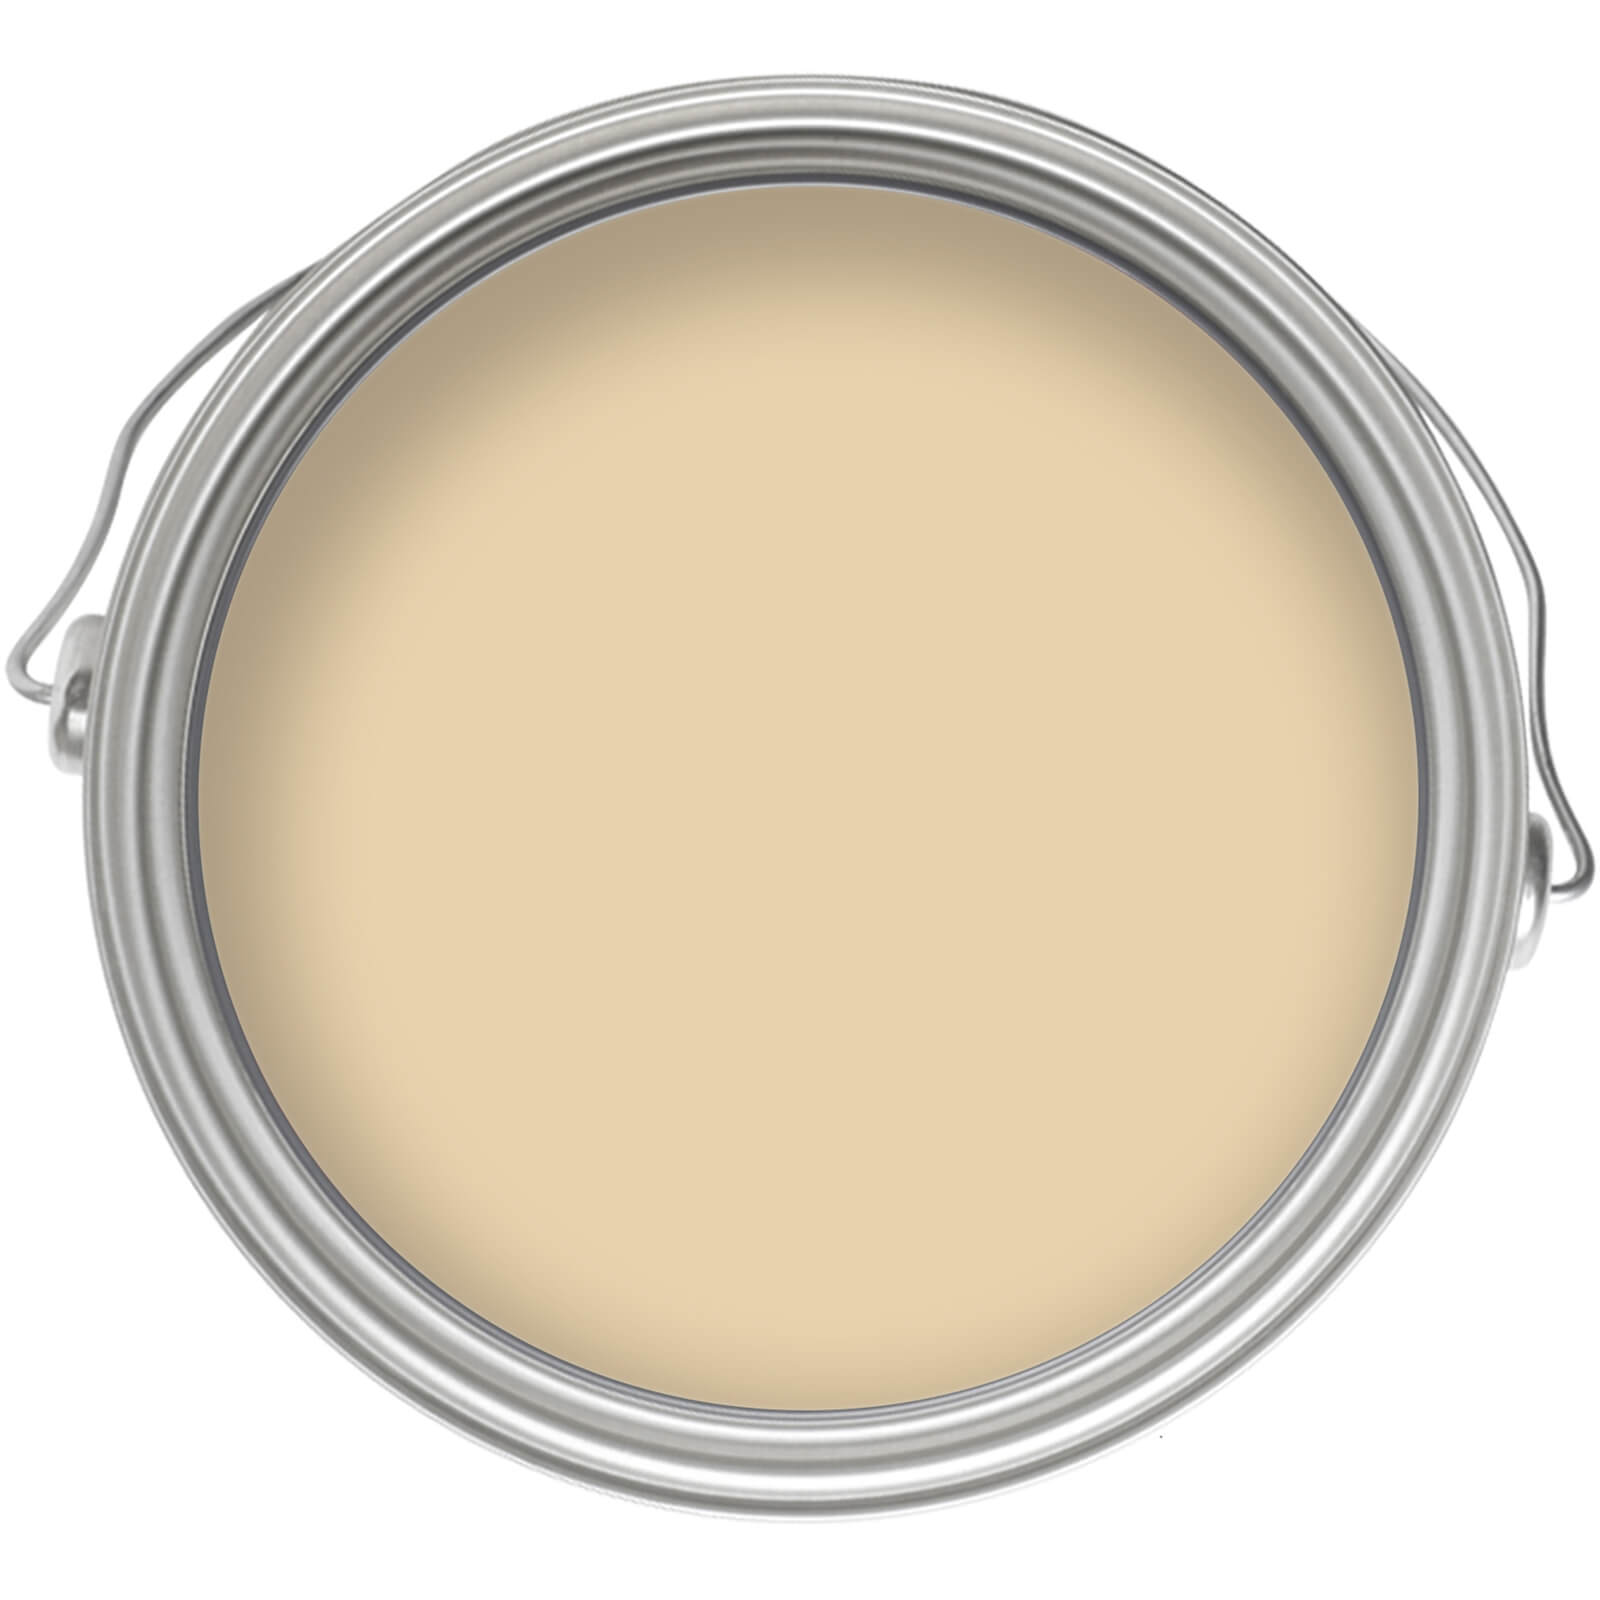 Photo of Homebase Smooth Masonry Colour Paint Tester - Regency Cream 250ml